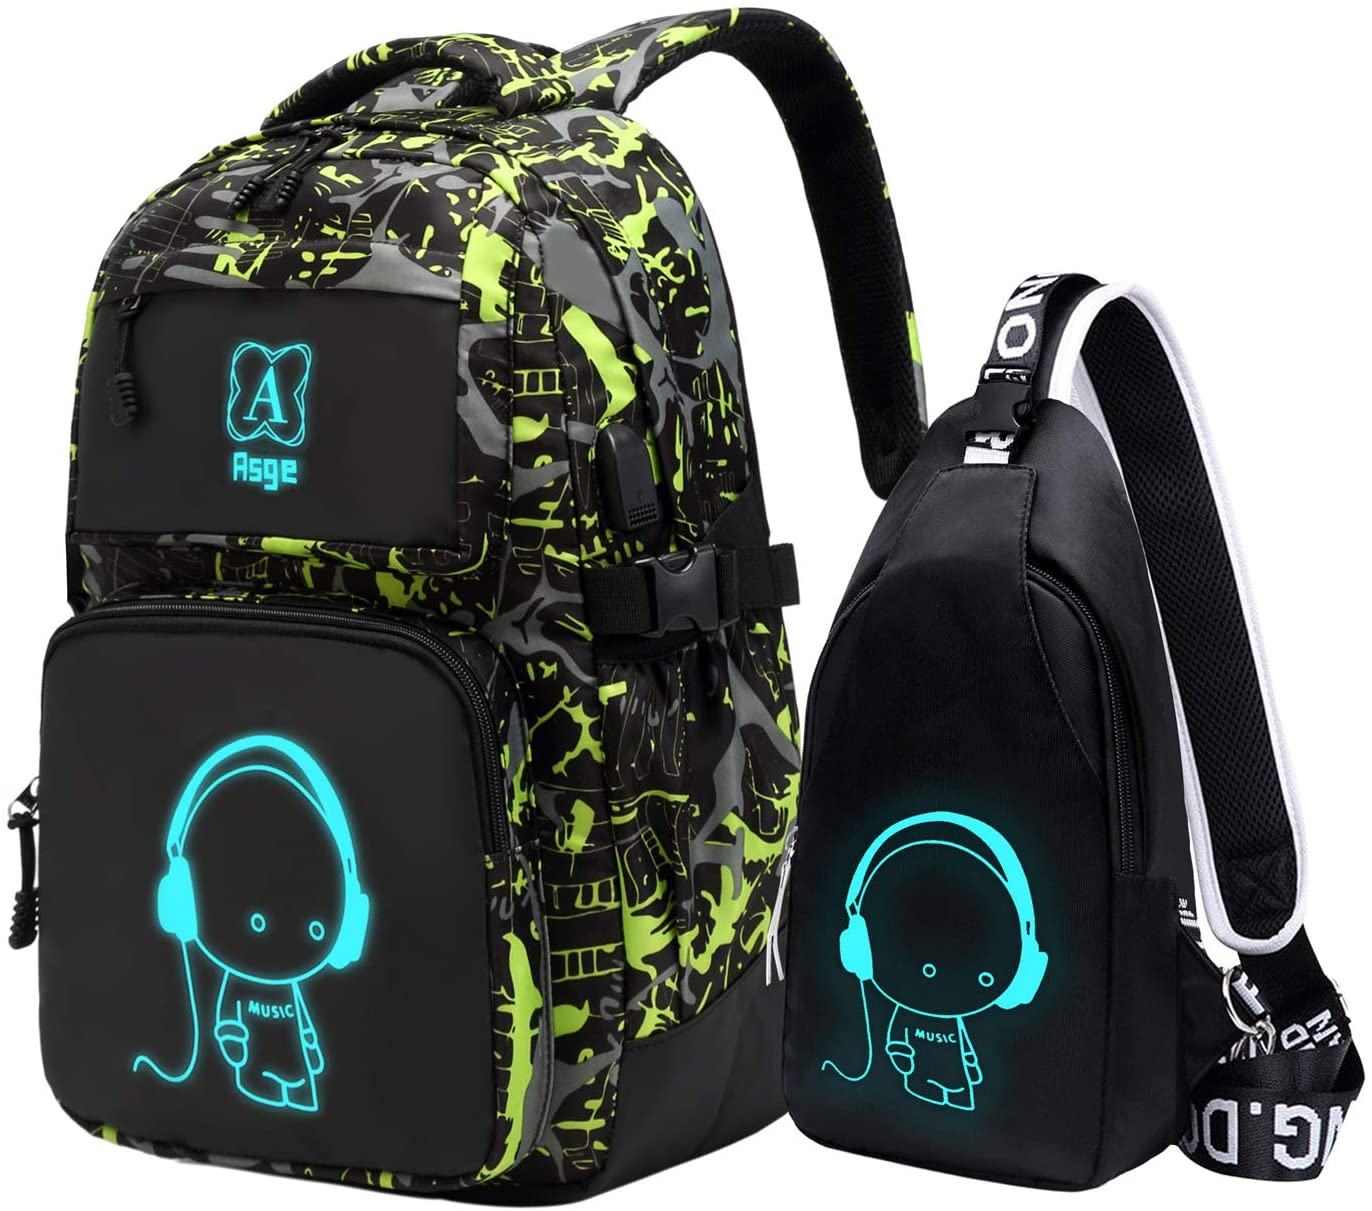 Asge boys backpack for kids Luminous camo School Bags for girls Bookbag and Sling Bag Set - image 1 of 8